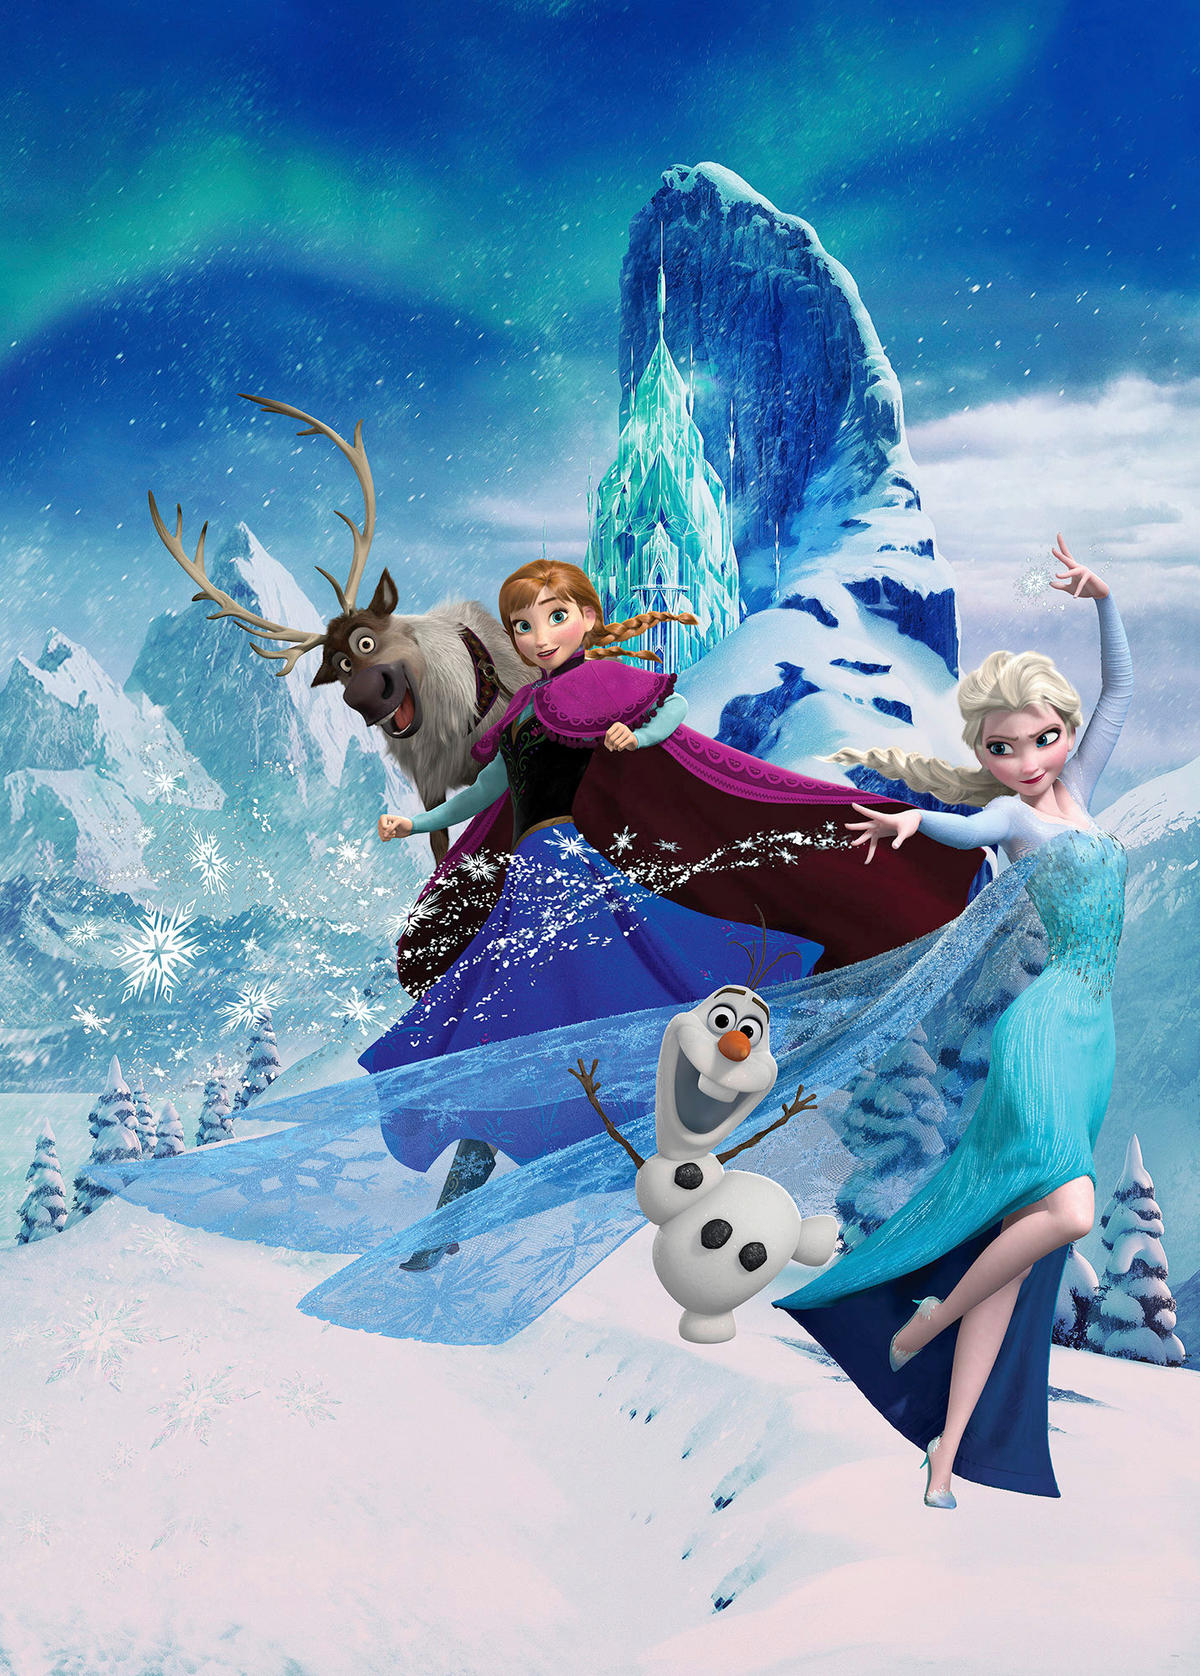 Komar Fototapete Frozen Elsas Magic DX4-014 Frozen B/H: ca. 200x280 cm ▷  online bei POCO kaufen